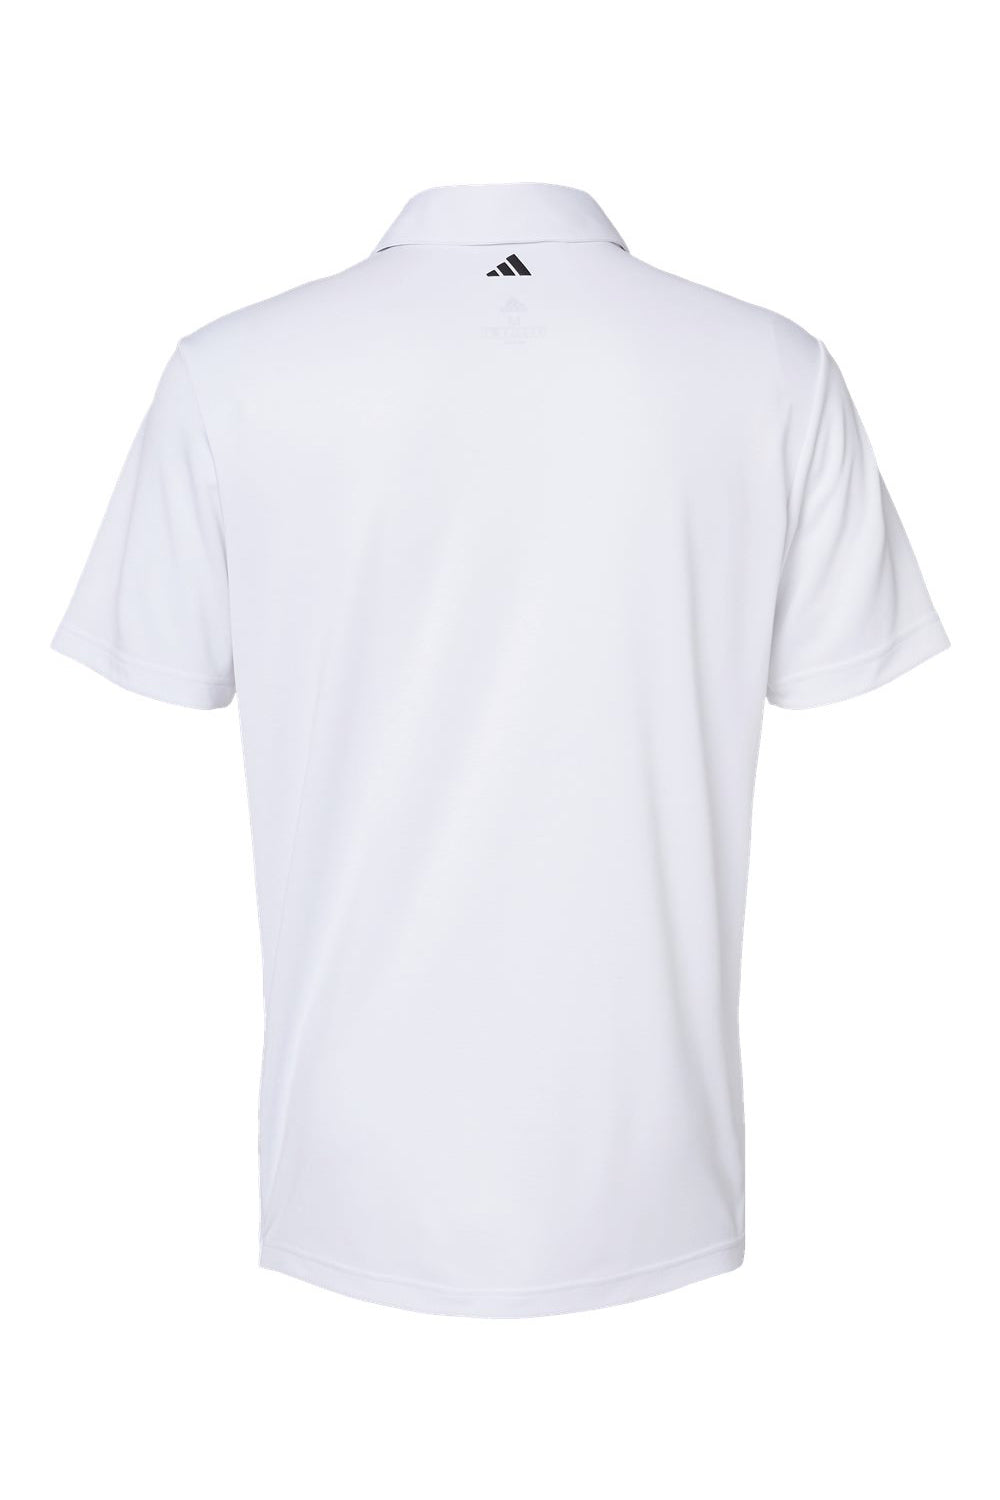 Adidas A480 Mens Floating 3 Stripes UPF 50+ Short Sleeve Polo Shirt White/Black Flat Back